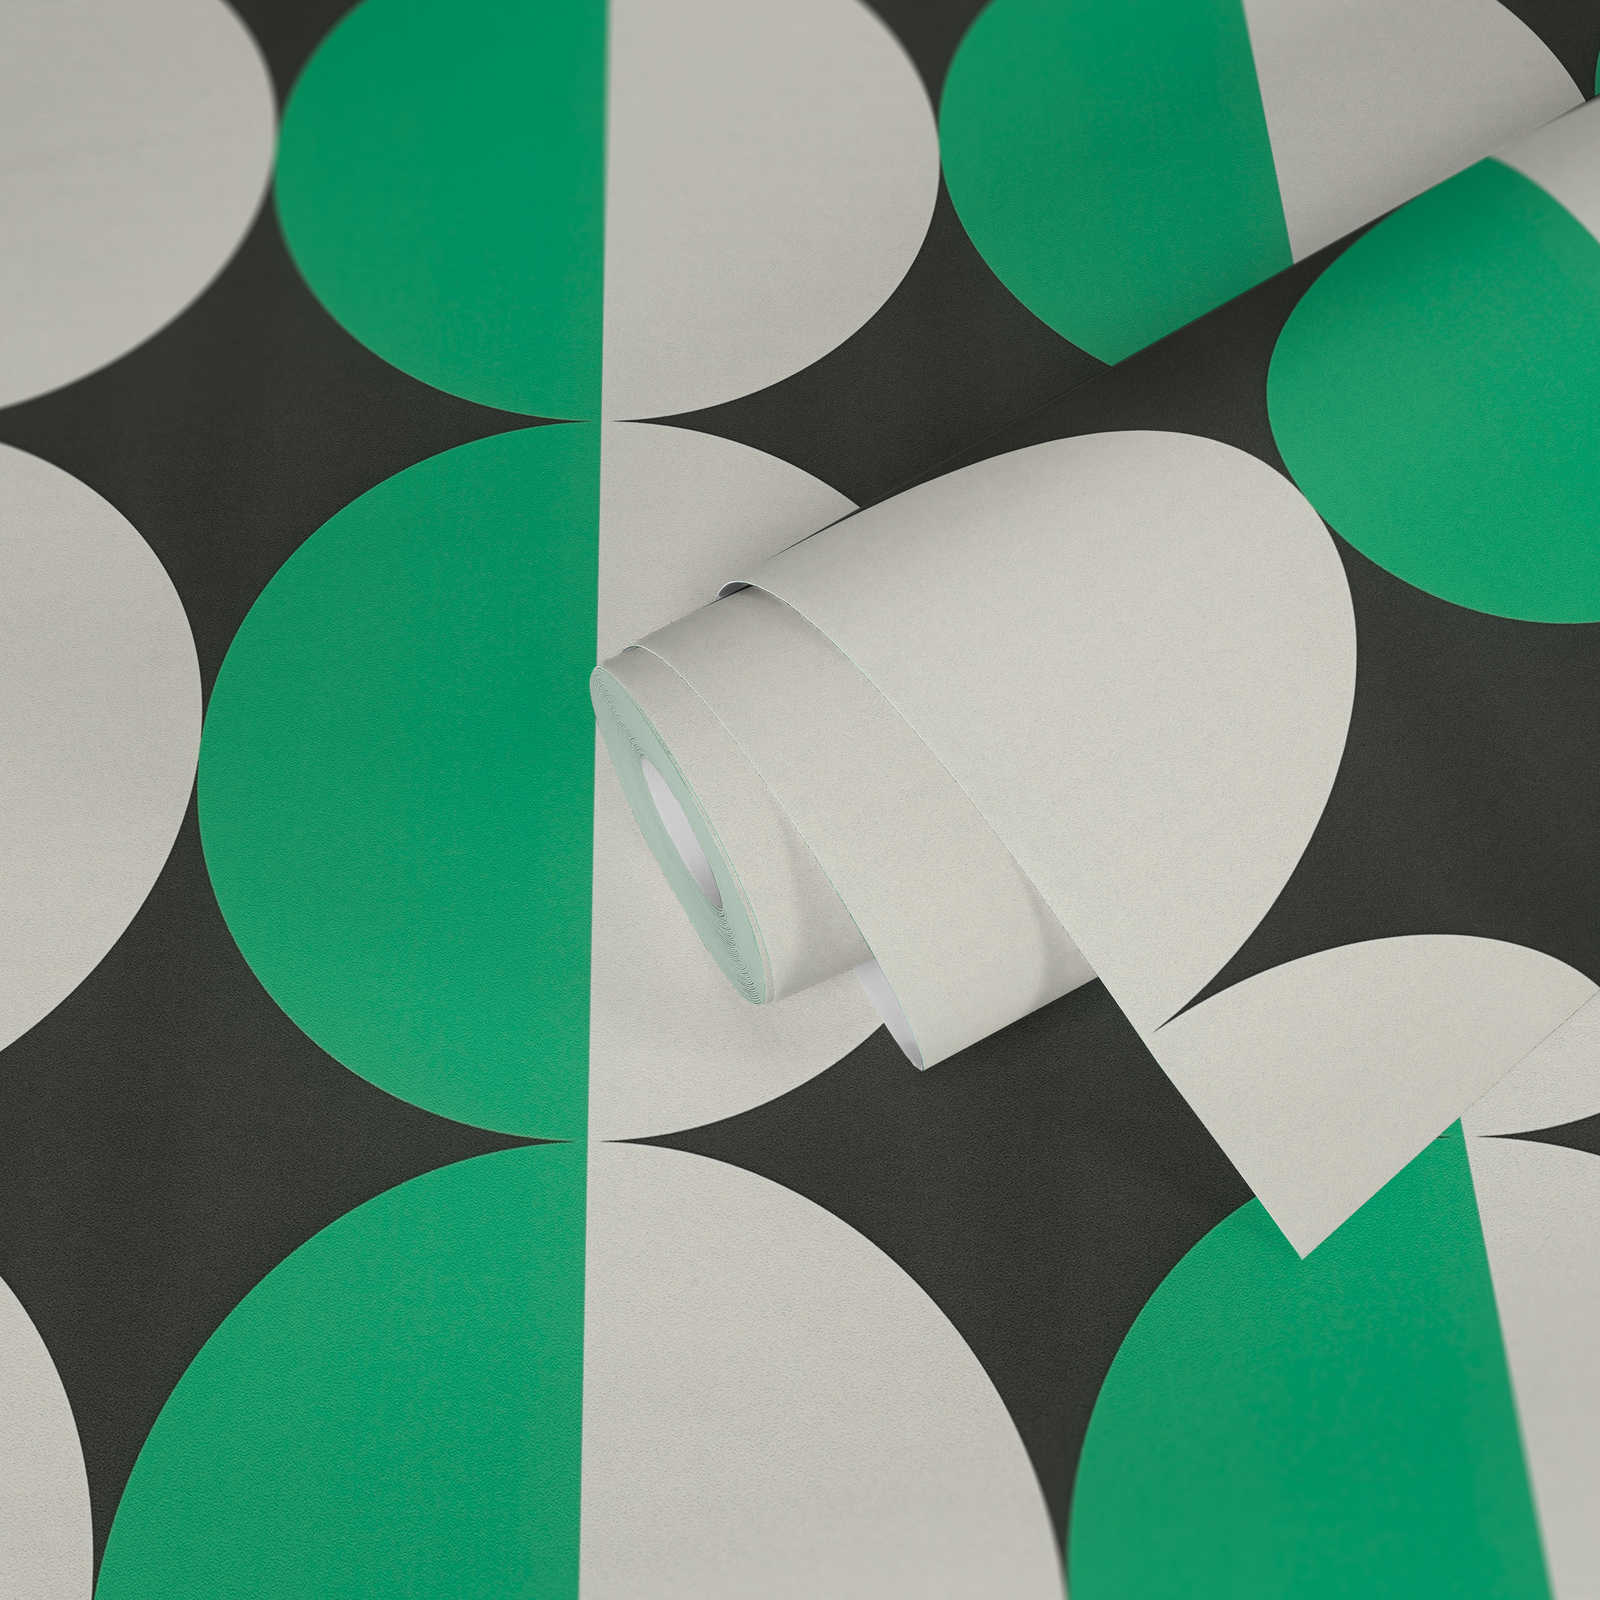             Retro 70s style circle pattern non-woven wallpaper - green, white, black
        